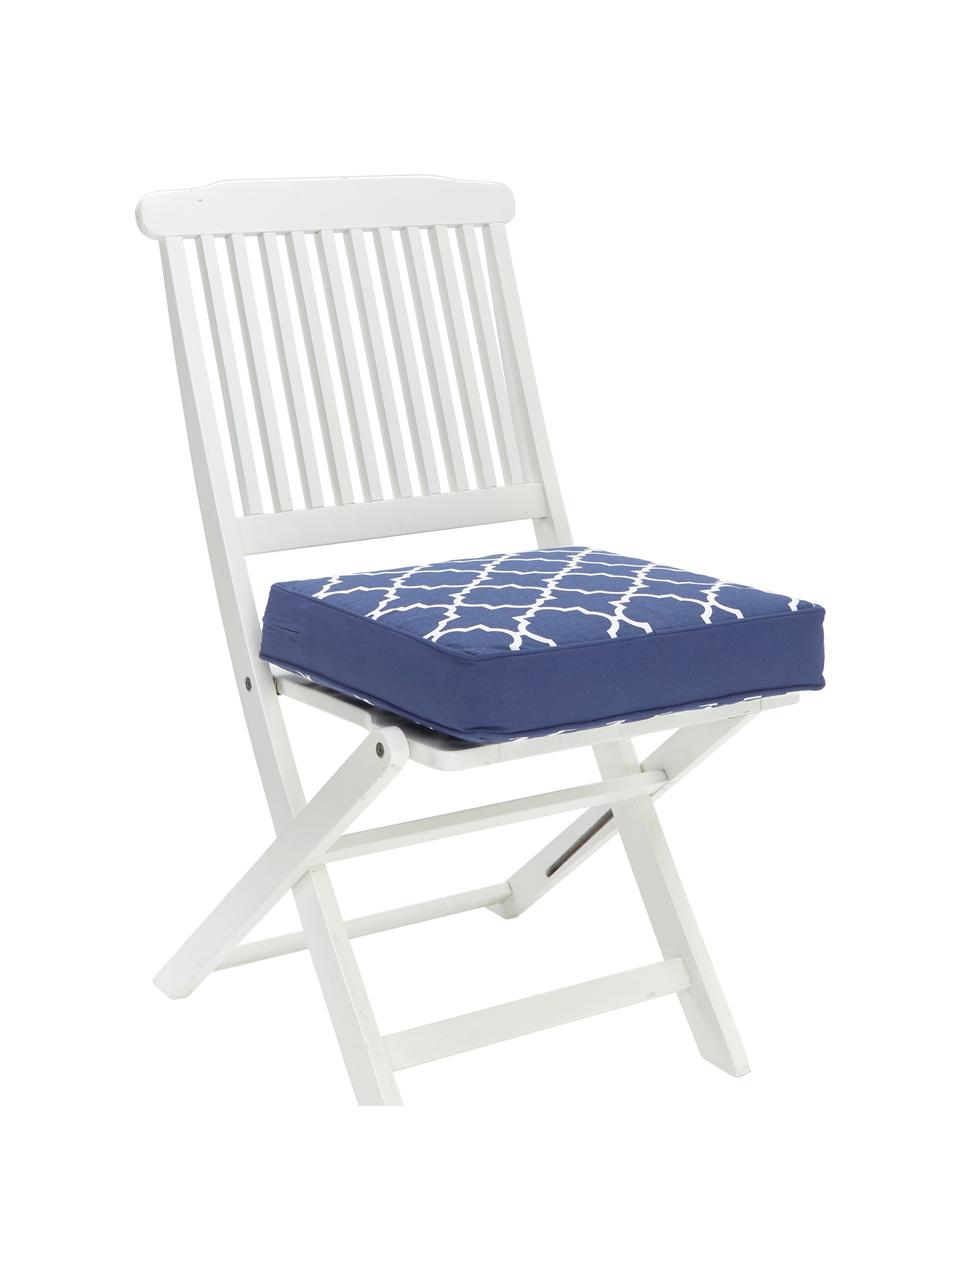 Hohes Sitzkissen Lana, Bezug: 100% Baumwolle, Blau, B 40 x L 40 cm